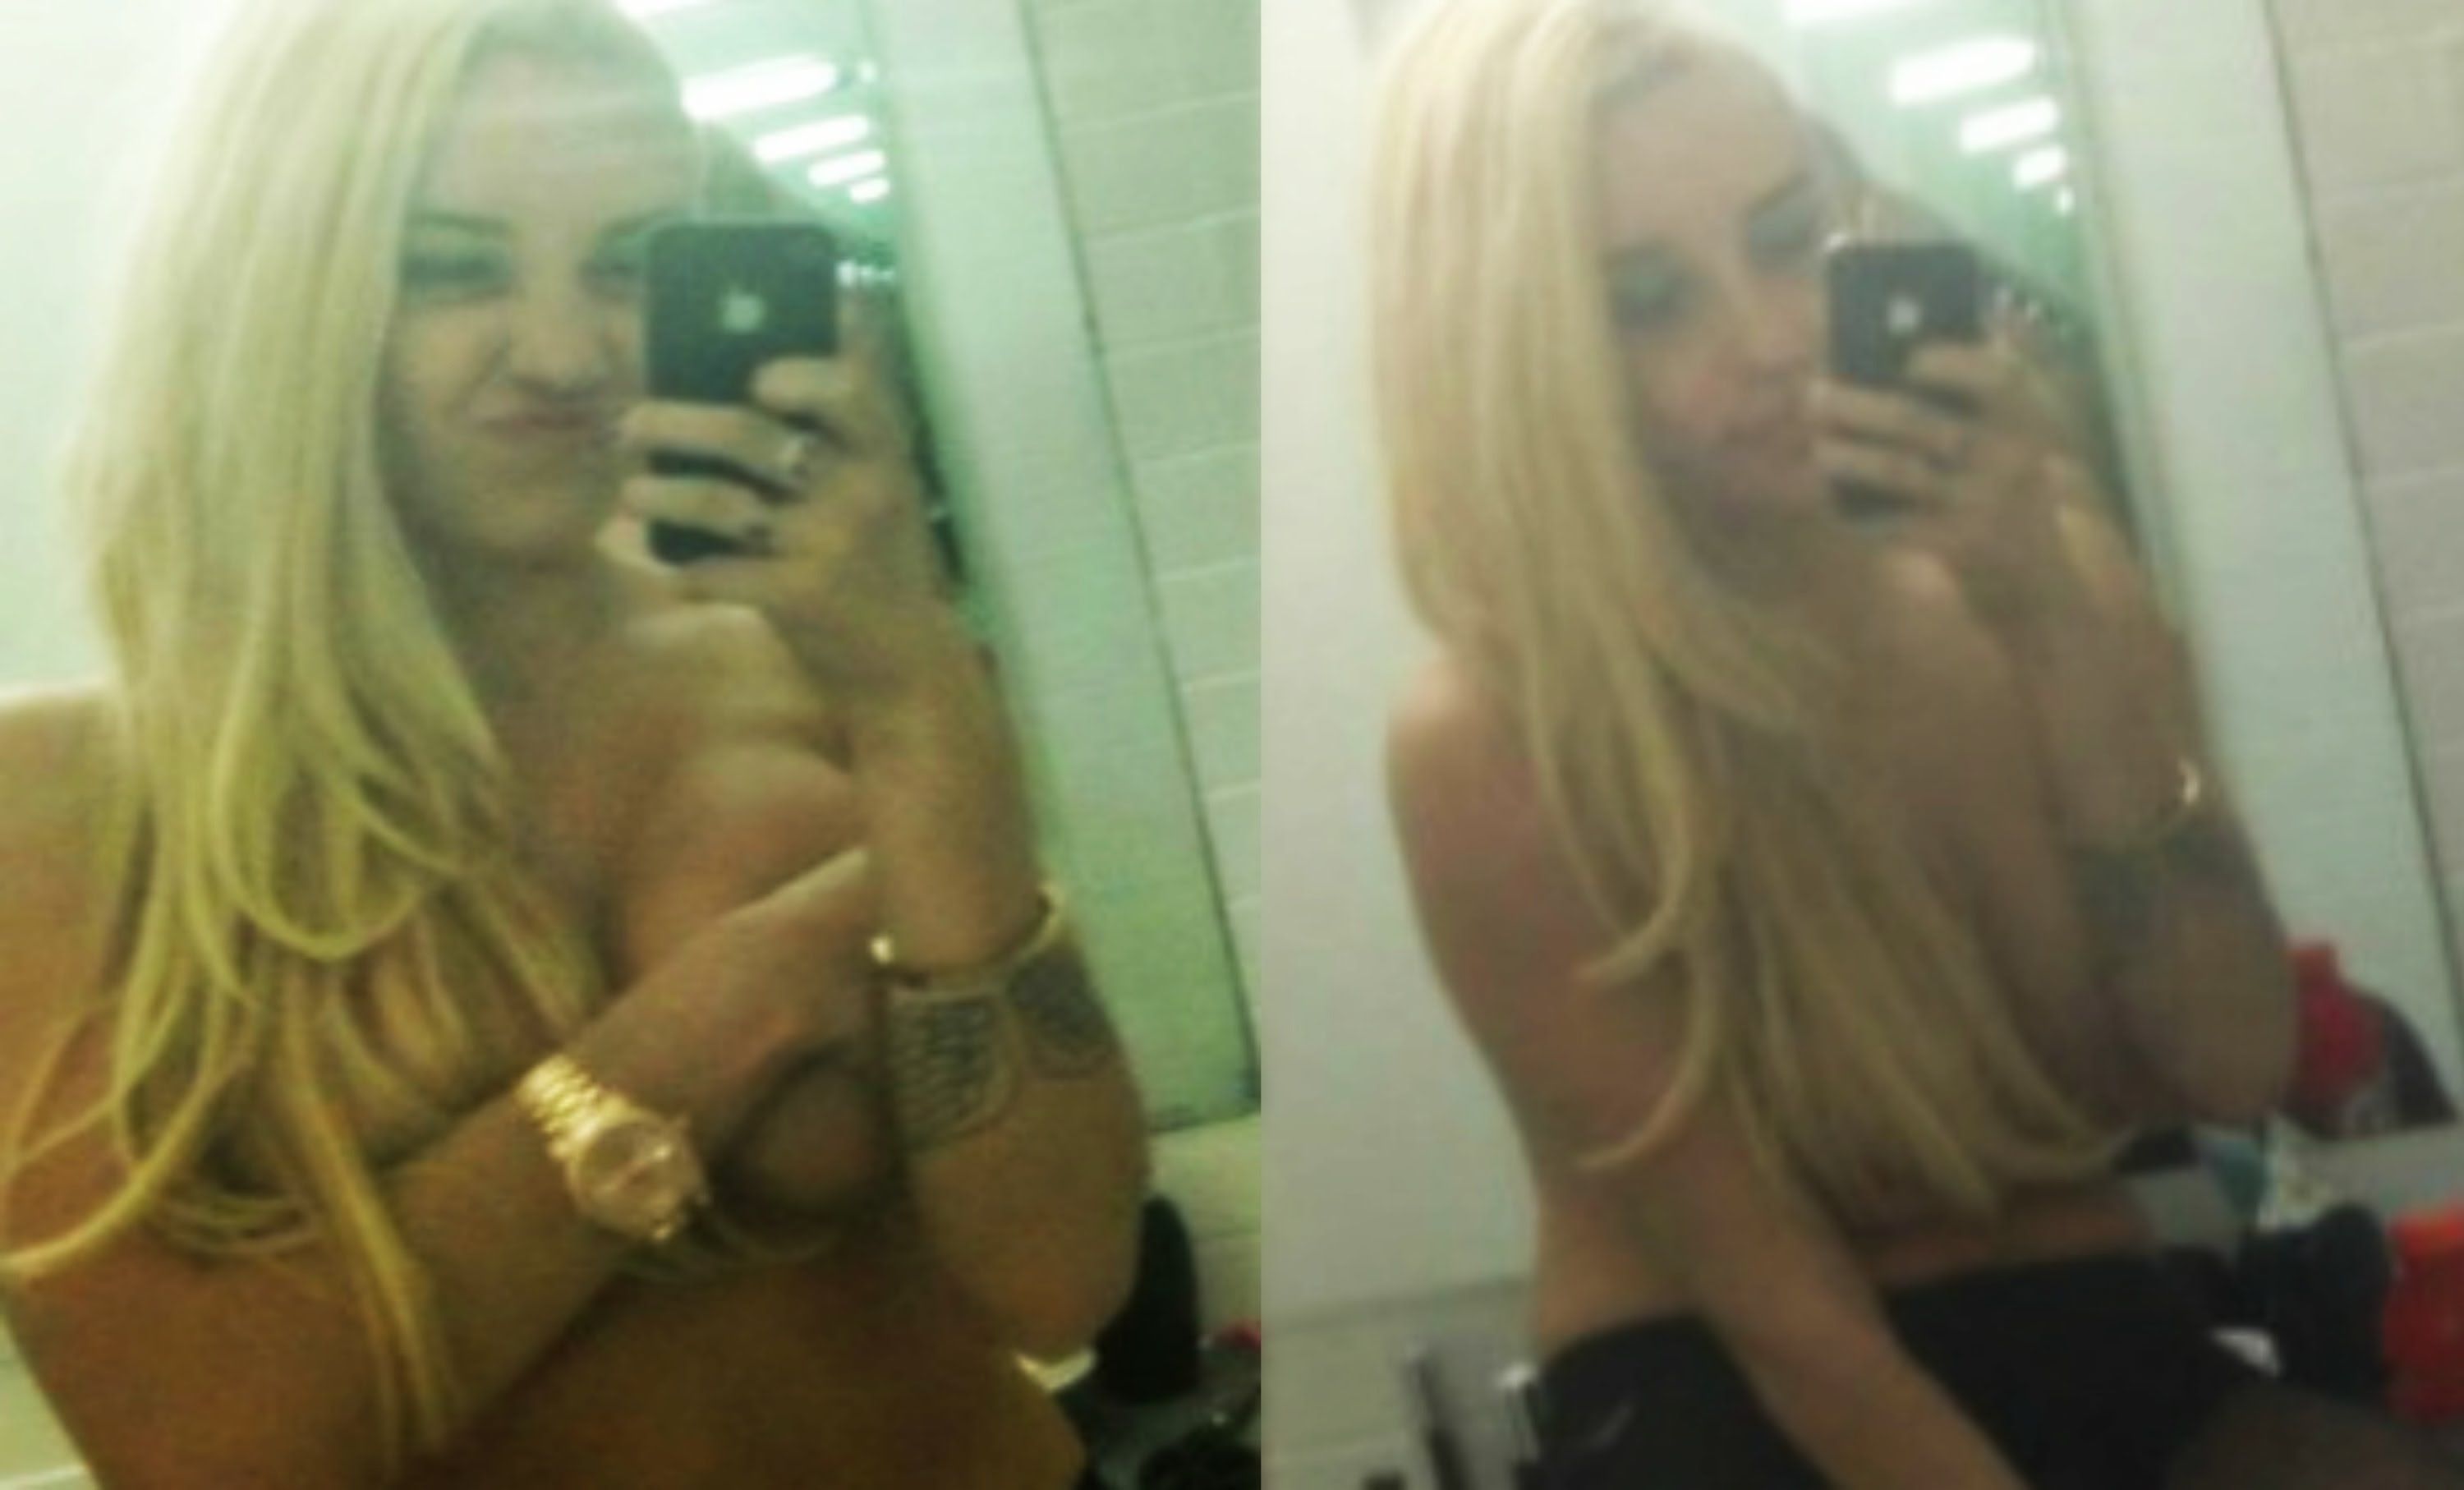 Amanda bynes leaked nude photos